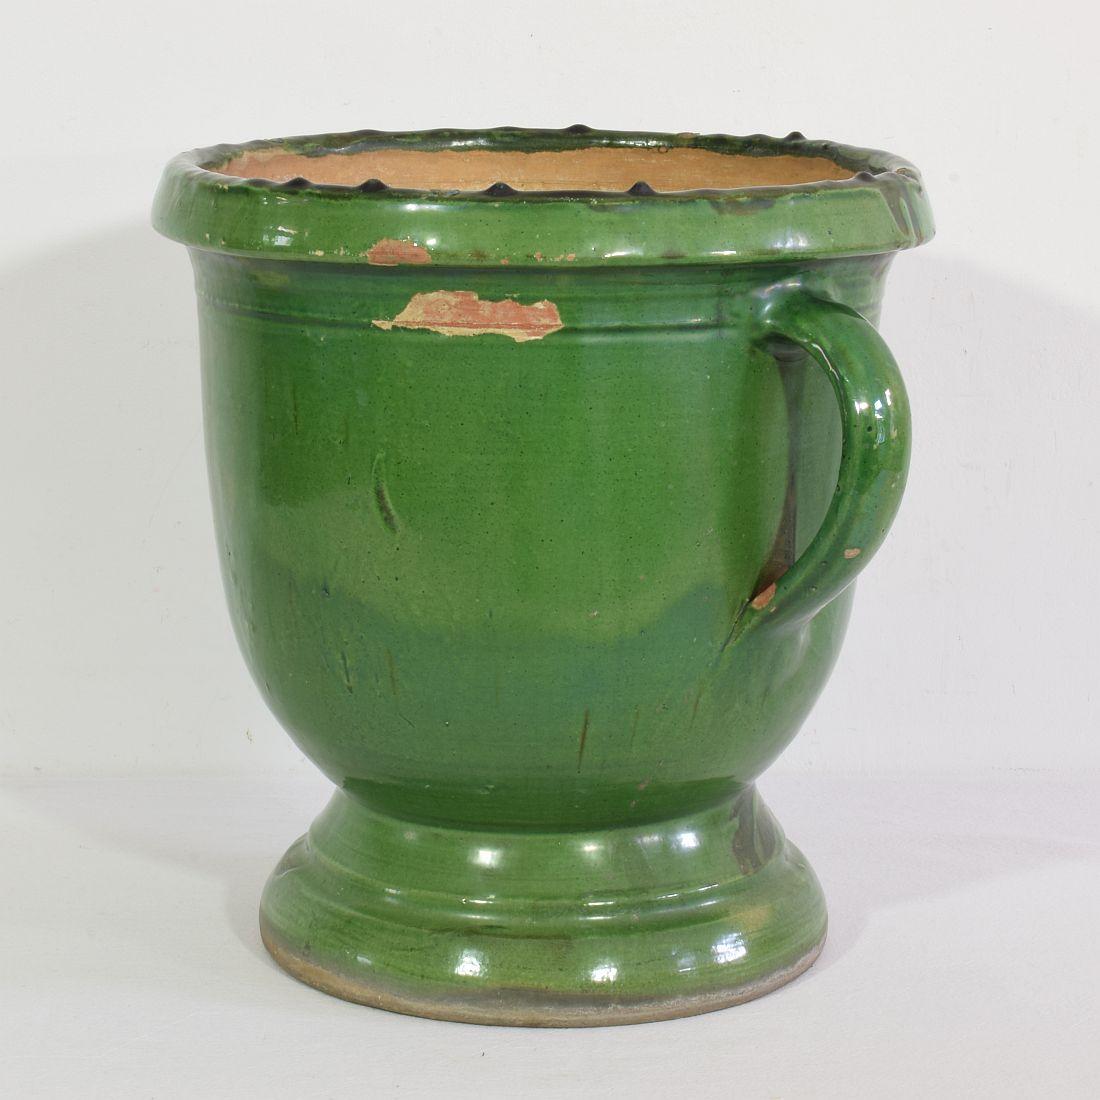 Beautiful glazed earthenware castelnaudary planter, France, circa 1850-1900, Good condition.